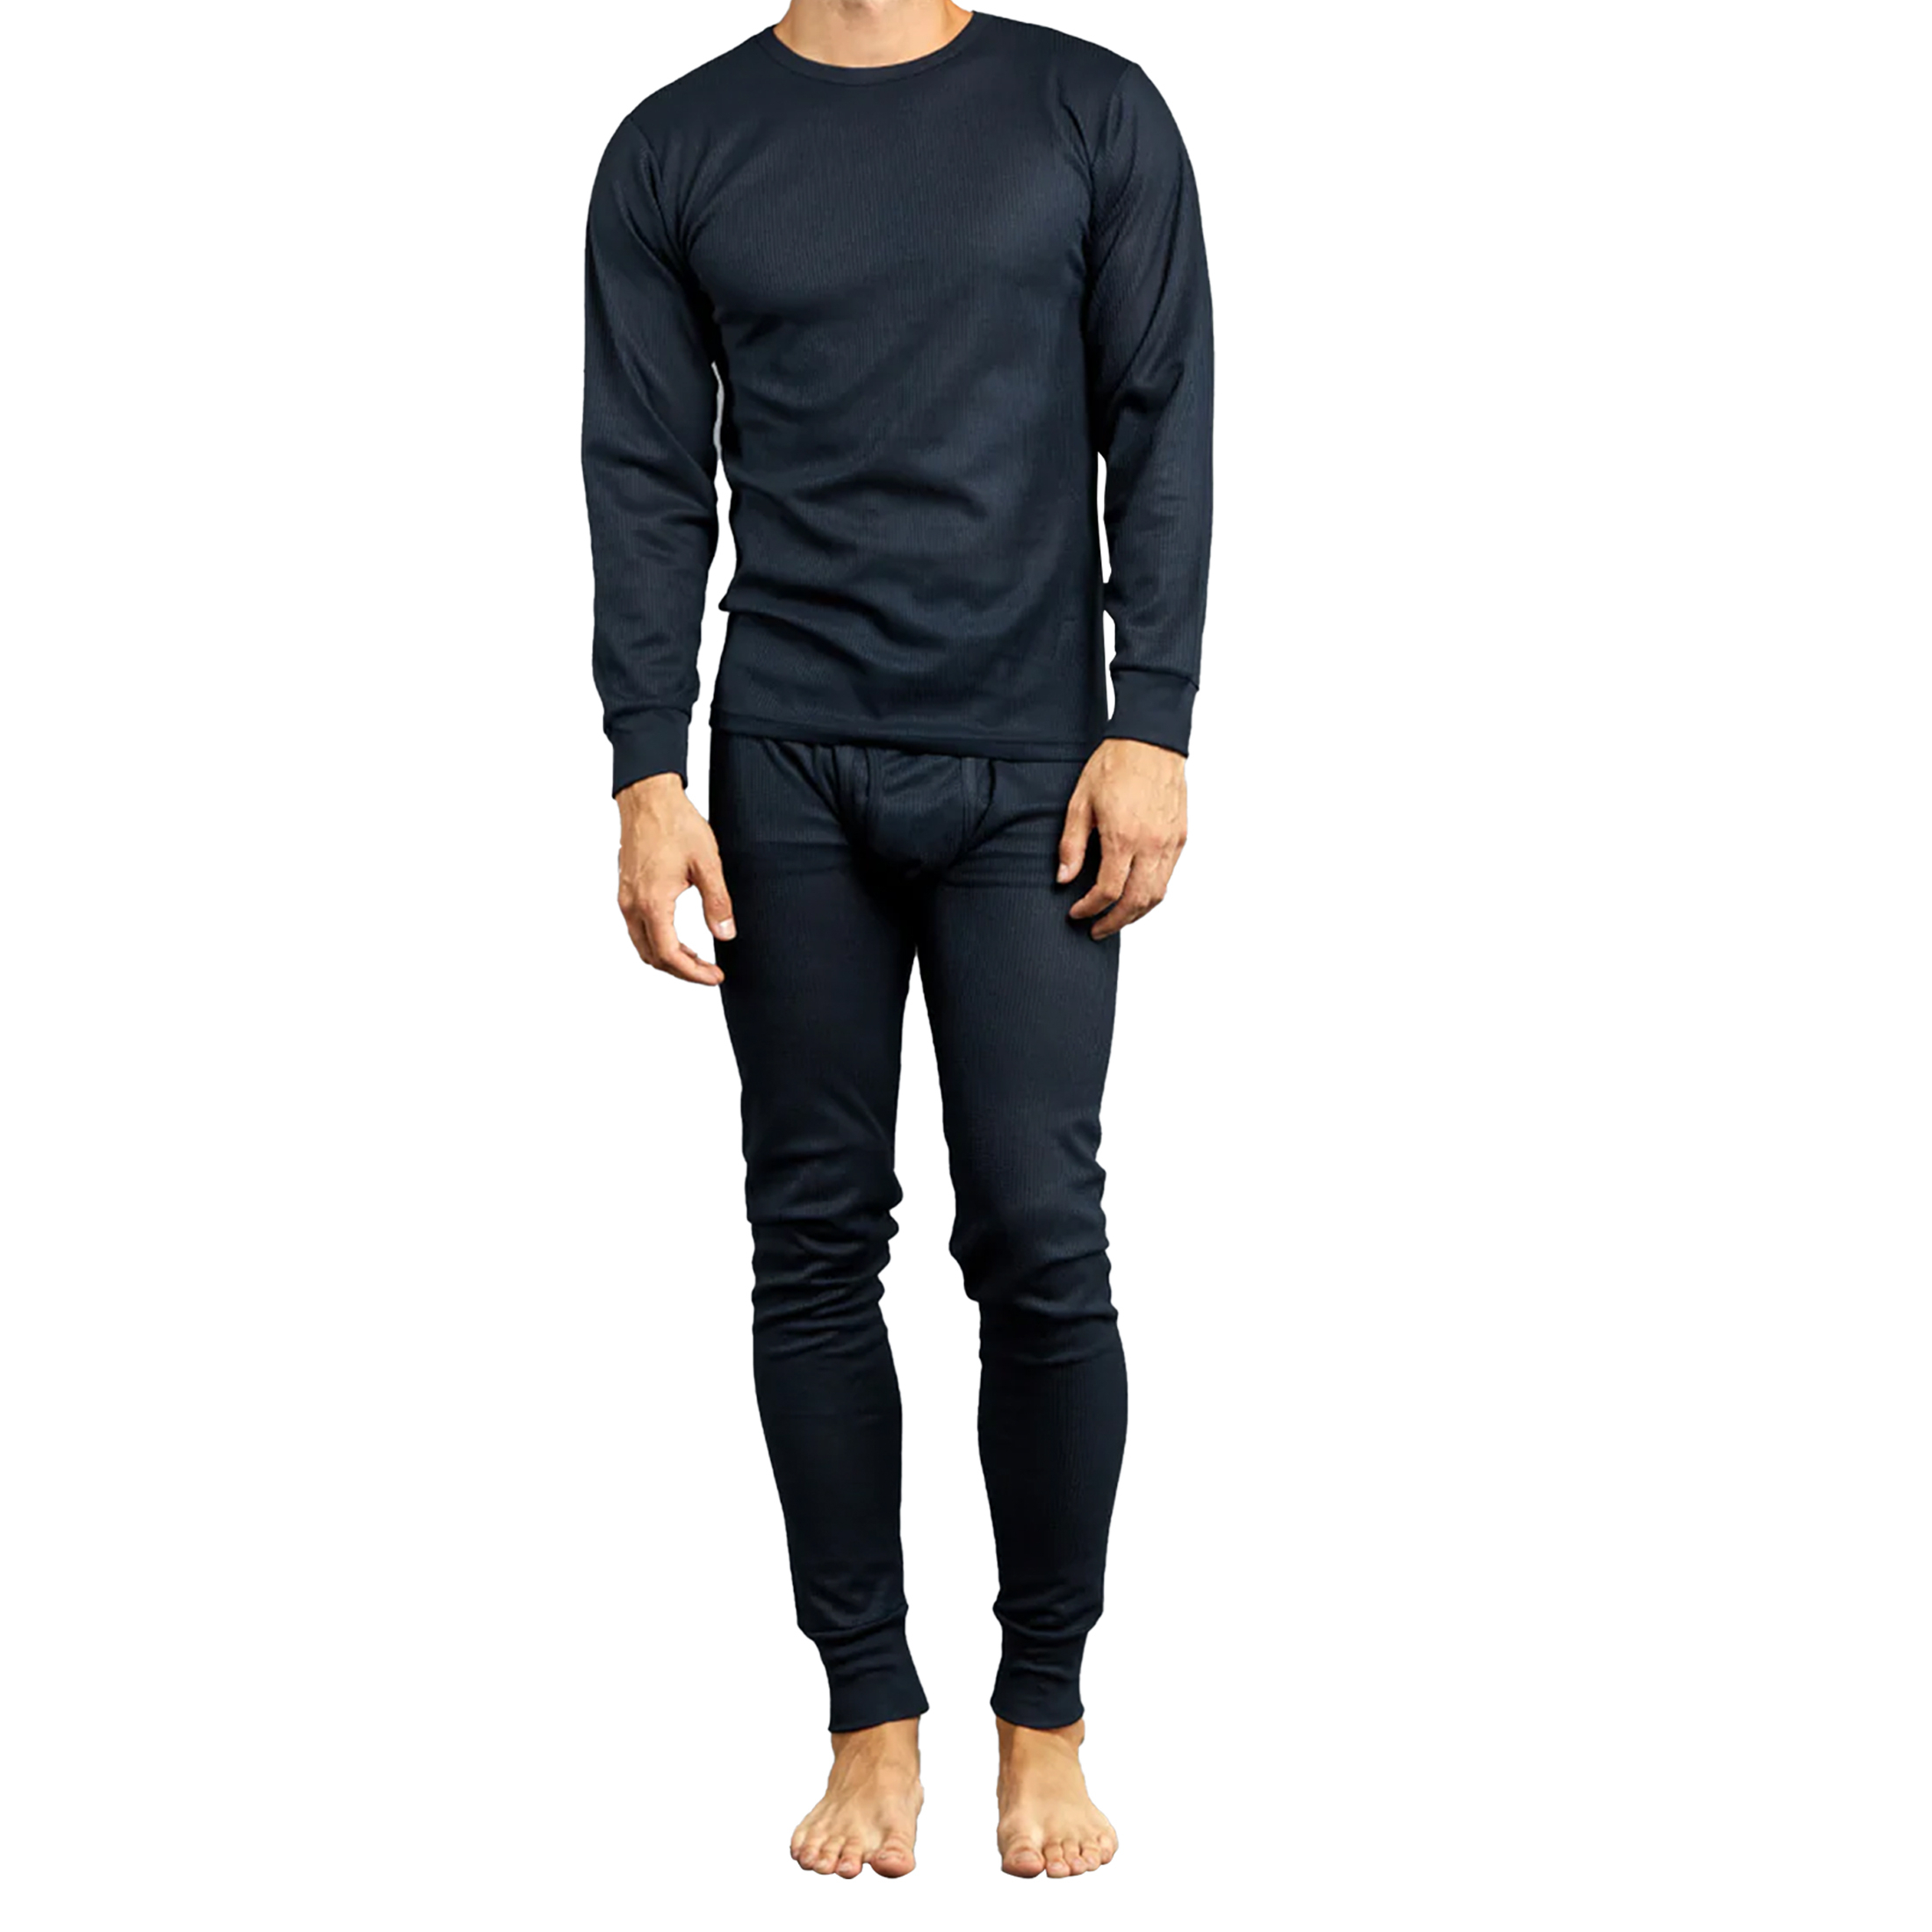 2-Piece: Men's Moisture Wicking Long Johns Base Layer Thermal Underwear Set (Top & Bottom) - Navy, 2X-Large